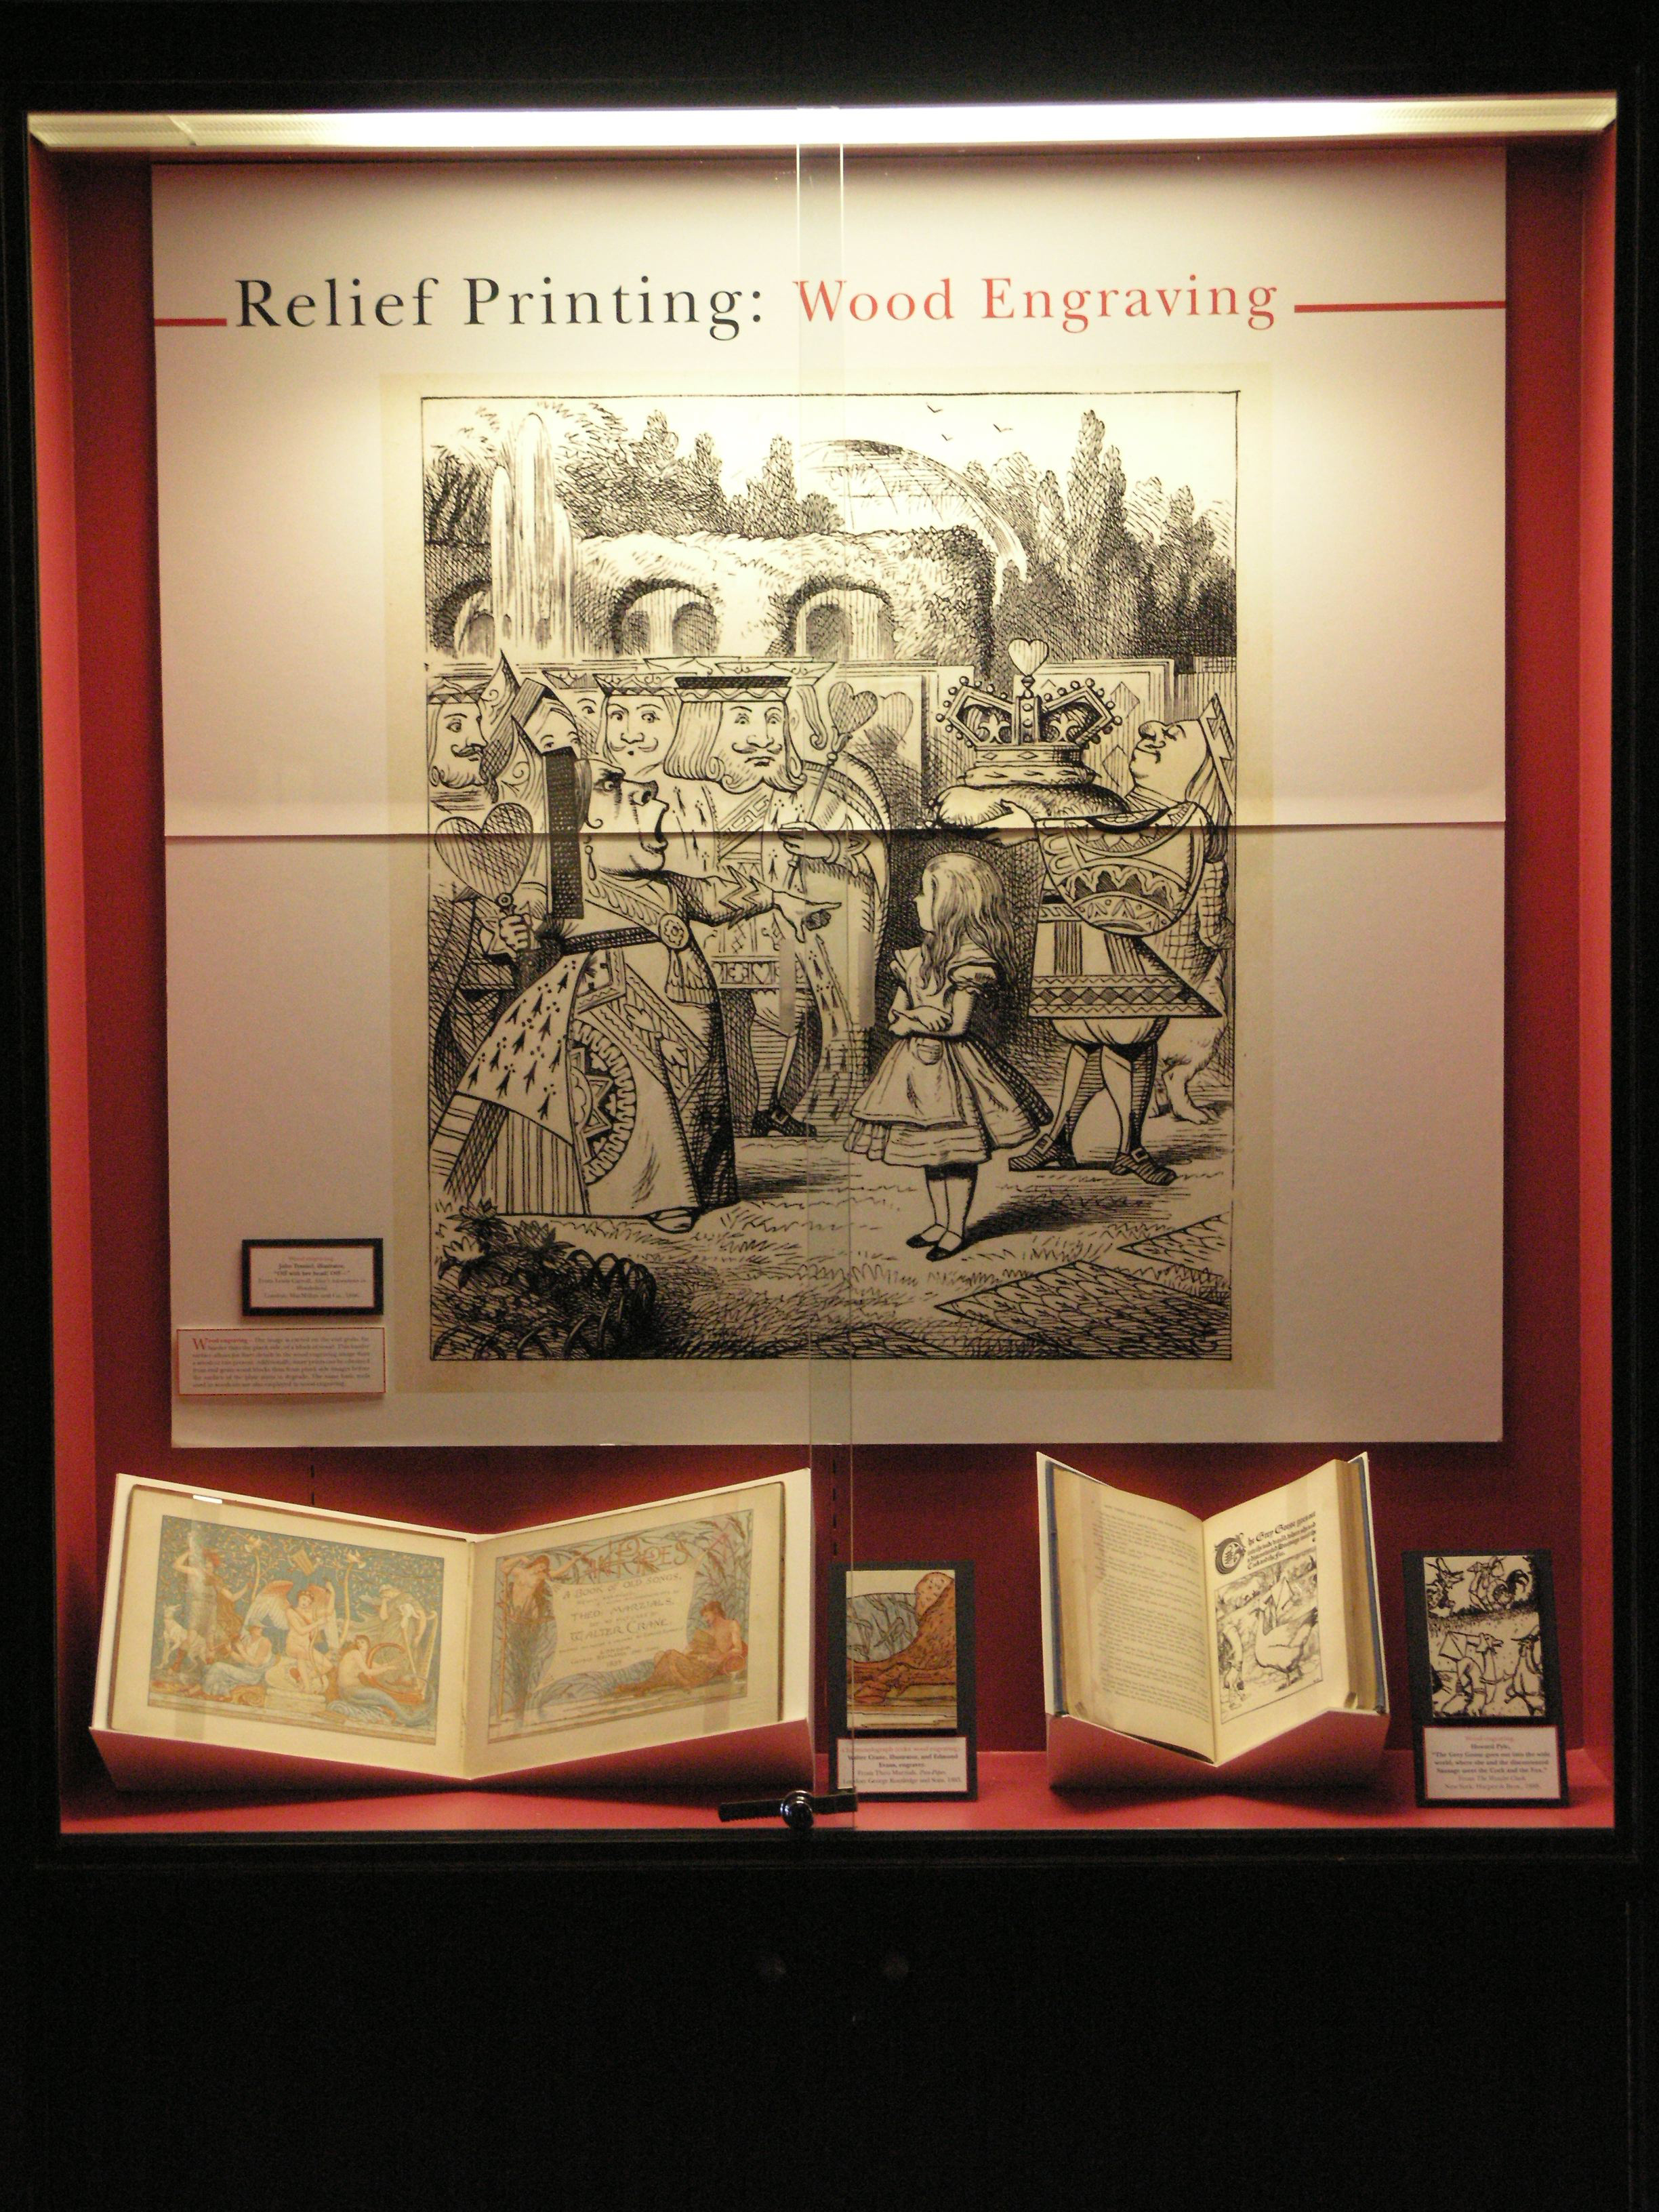 Case 2 - Relief Printing: Wood Engraving